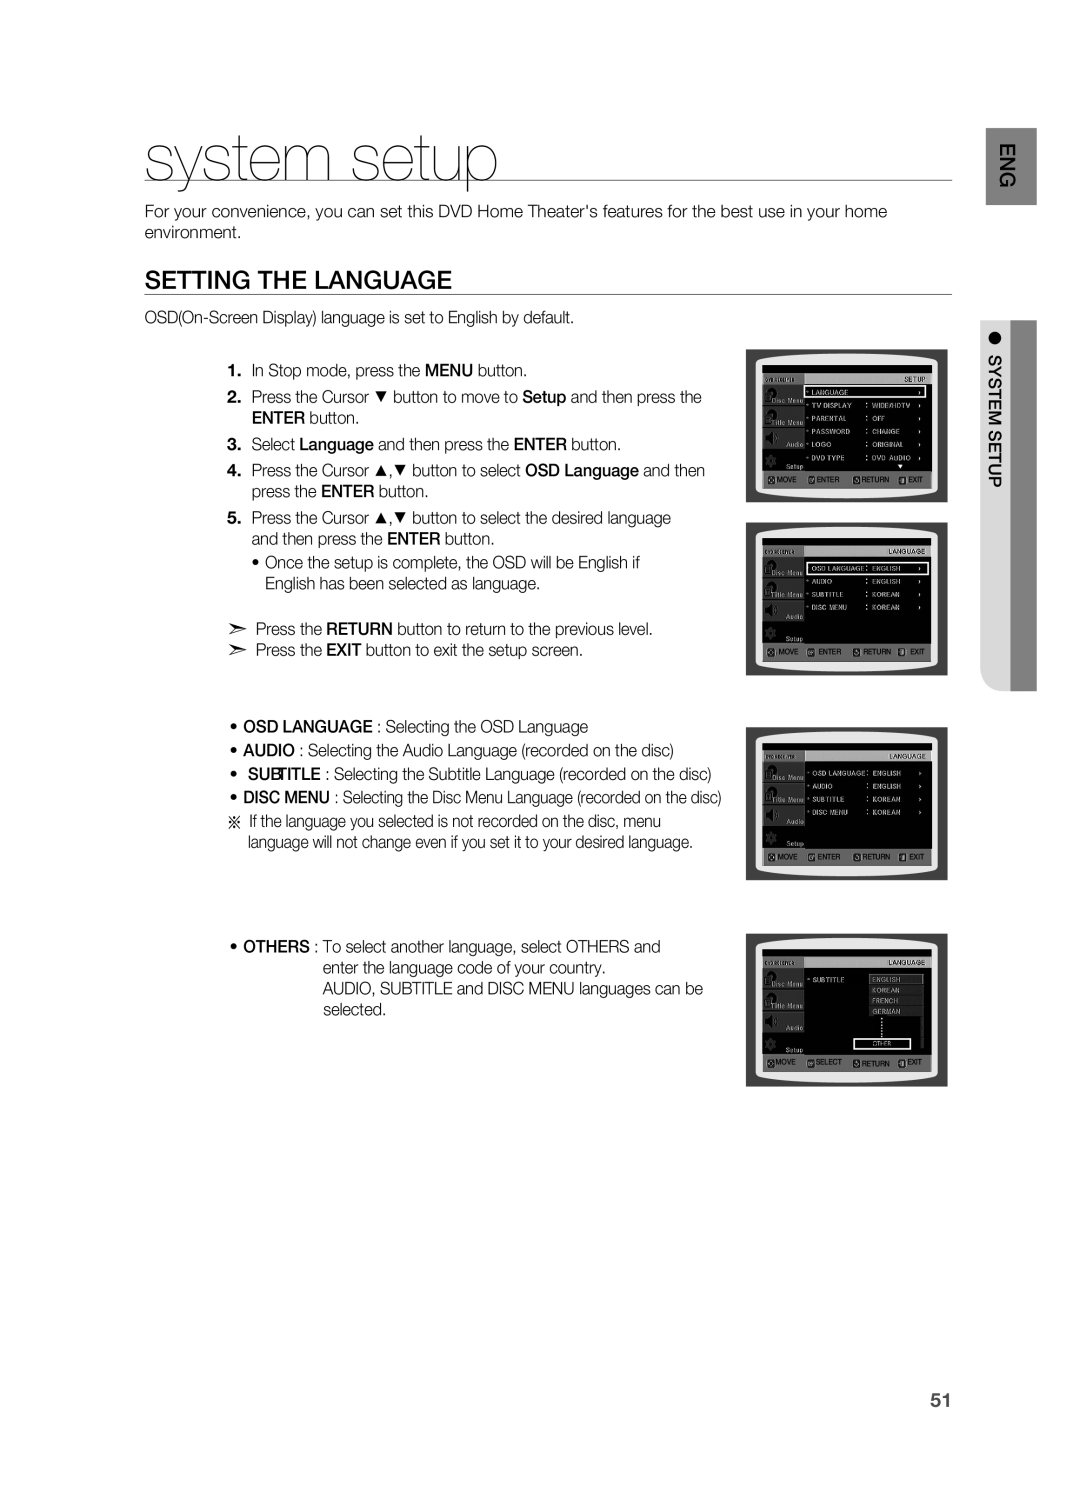 Samsung HT-Z310, HT-TZ312 manual system setup, Setting the Language 